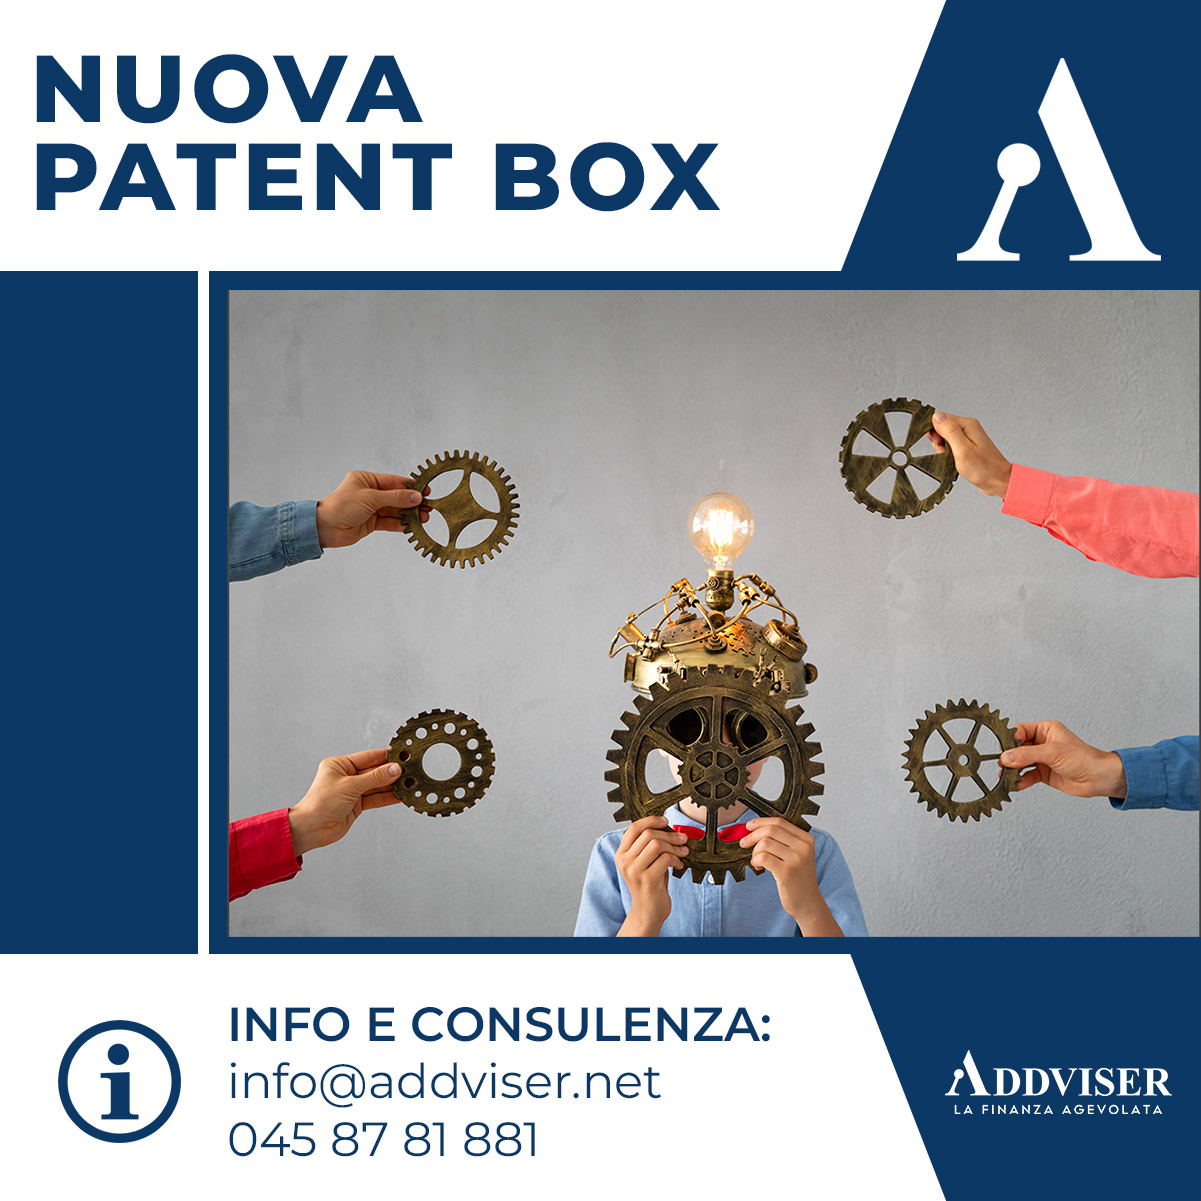 Nuova Patent Box